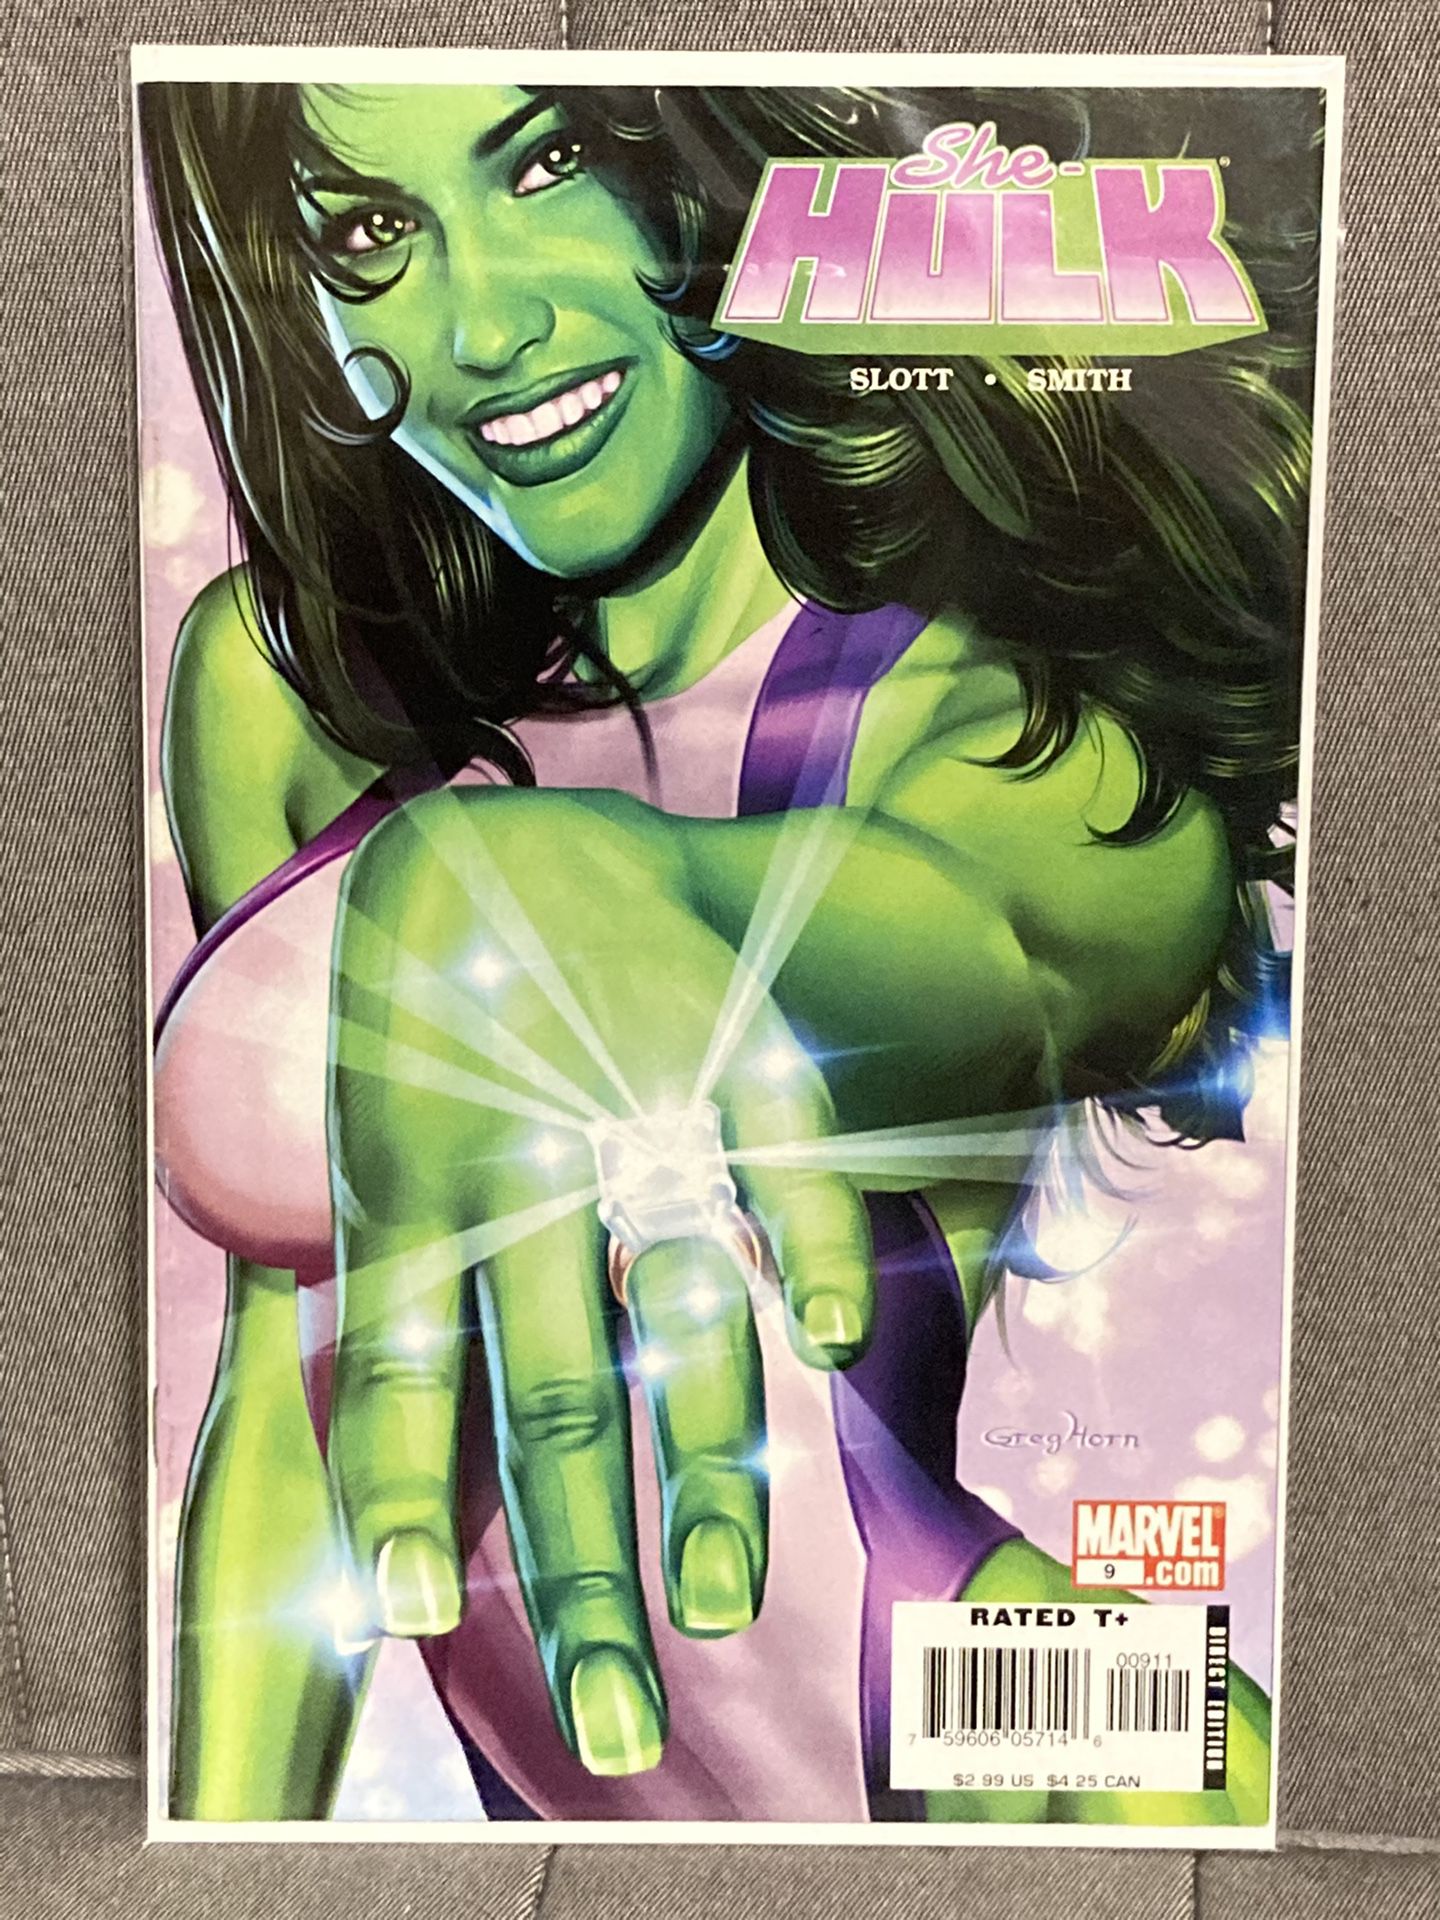 Marvel Comics THE HULK issue #9 Variant Greg Horn Ring Cover - First Print - Hot / She-Hulk / Key Issue!!